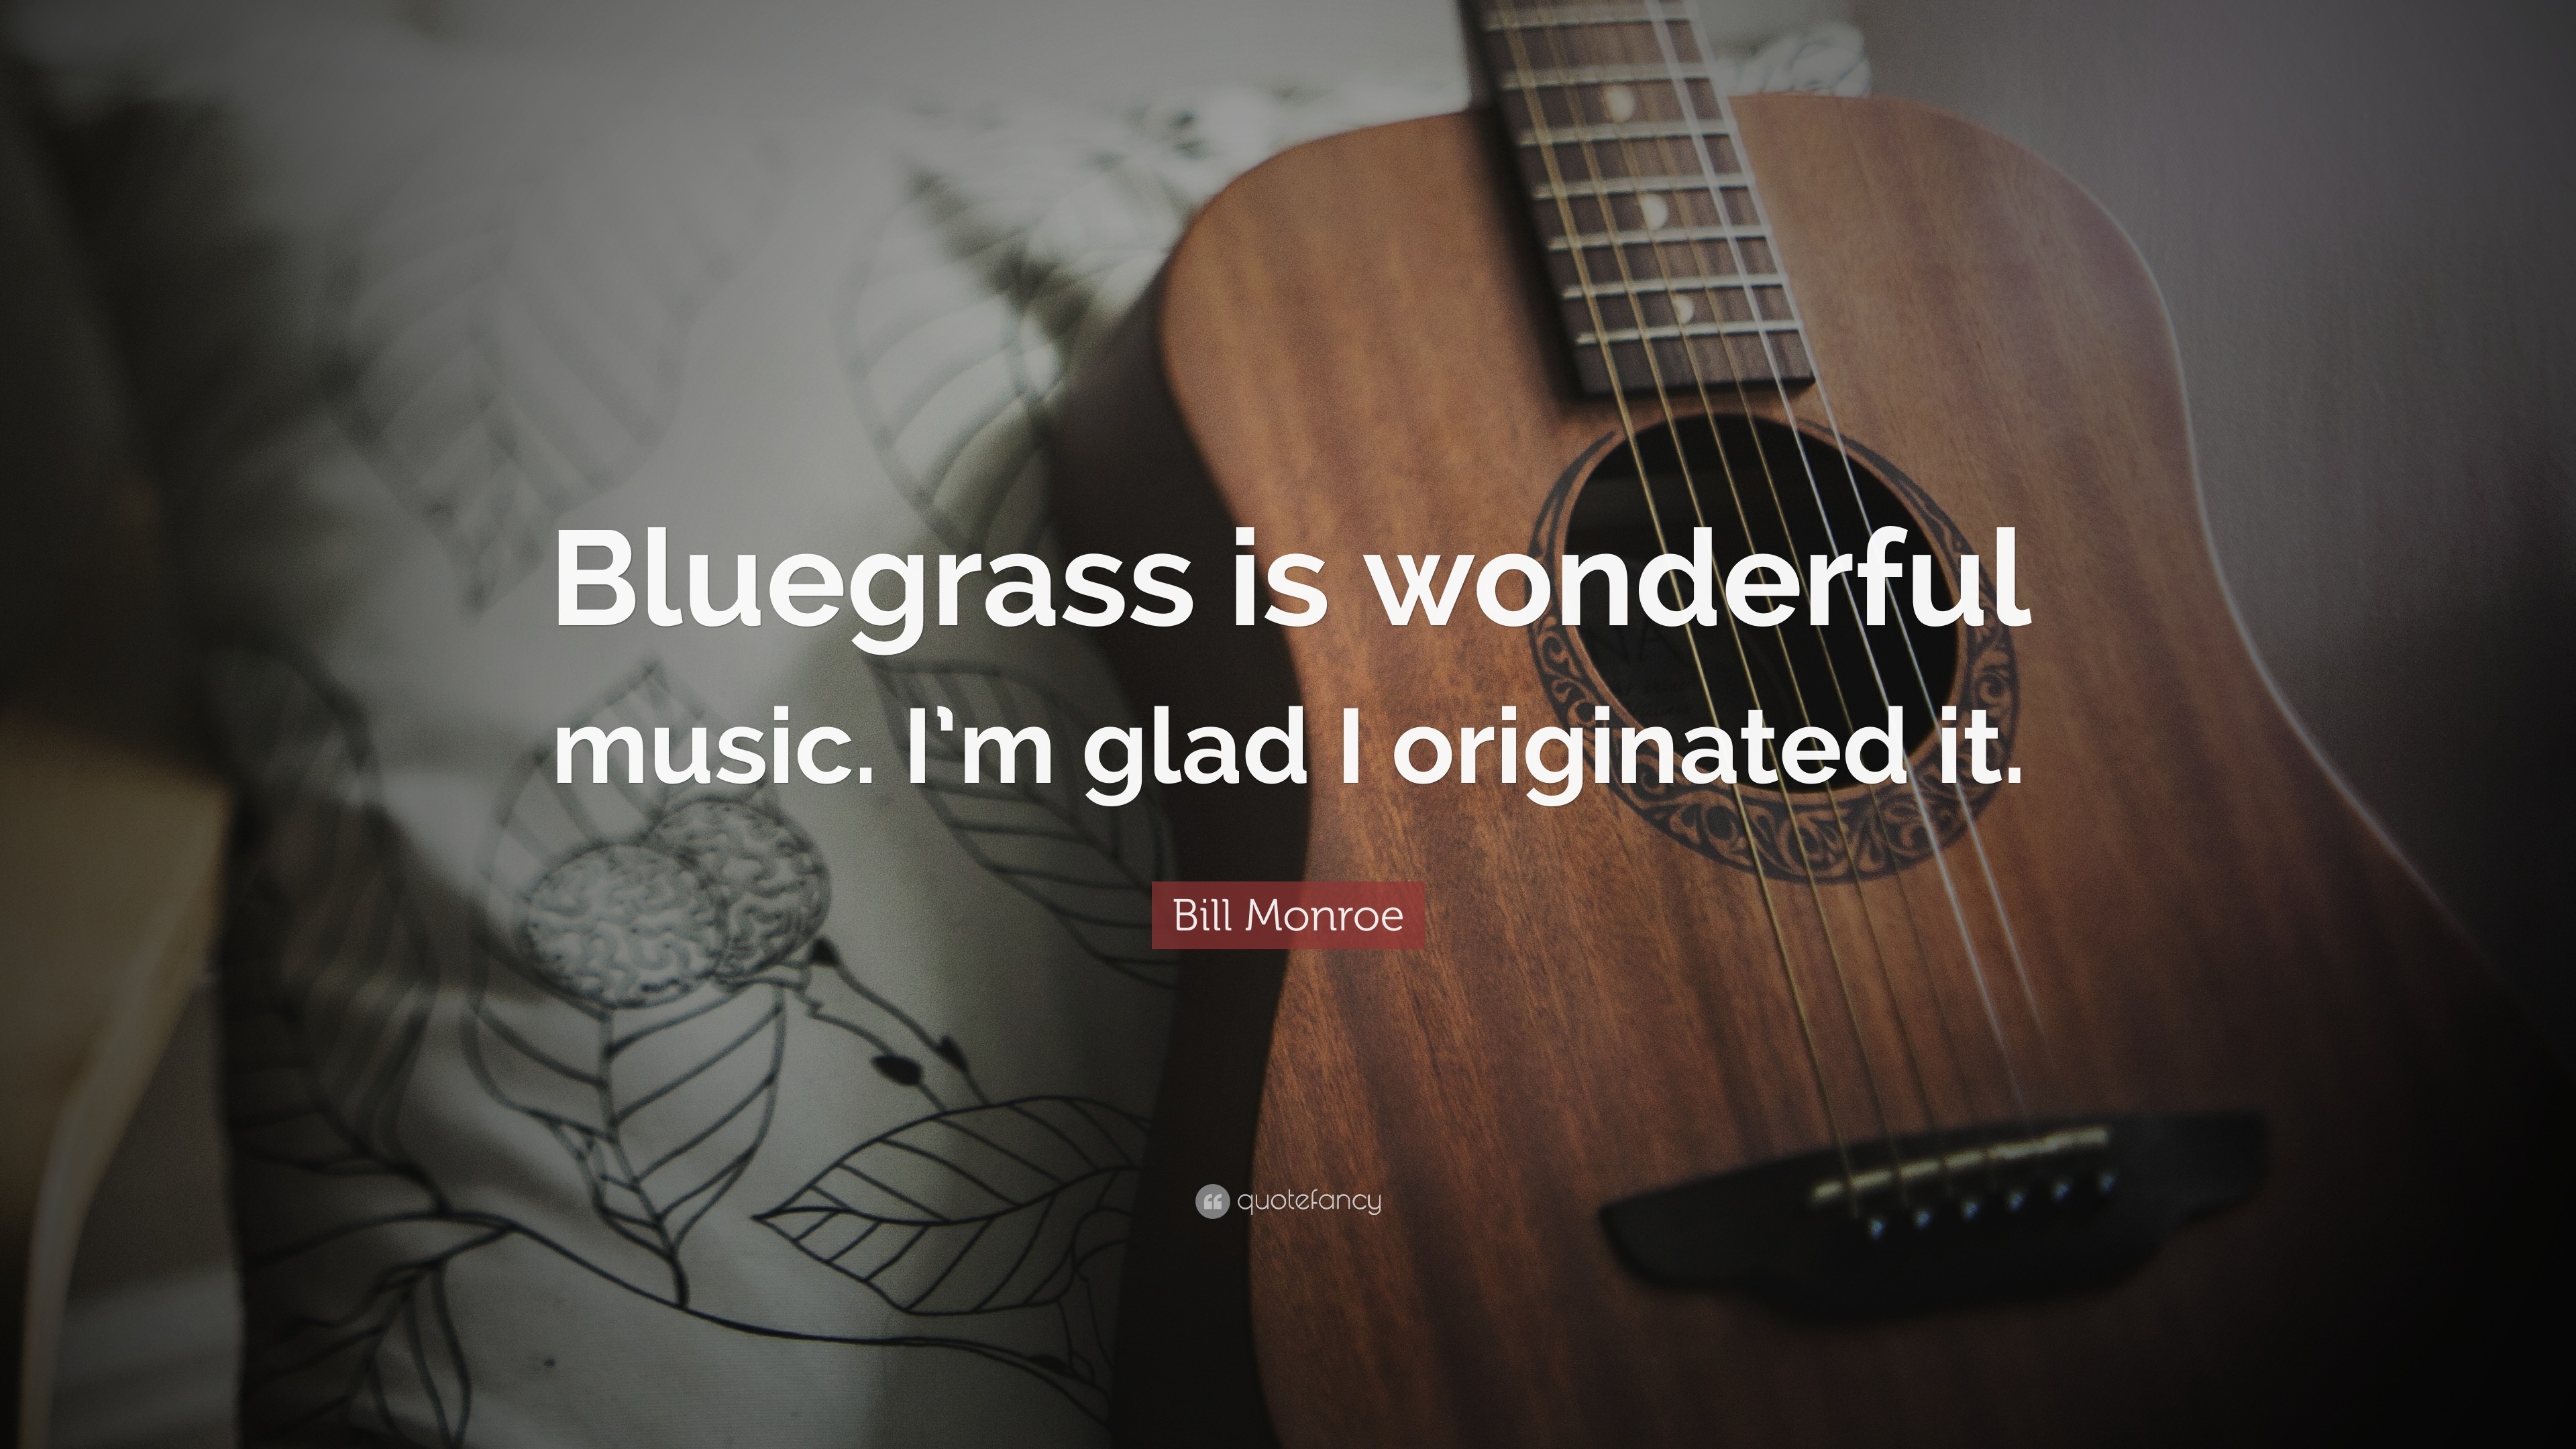 3840x2160 Bill Monroe Quote: “Bluegrass is wonderful music. I'm glad I originated